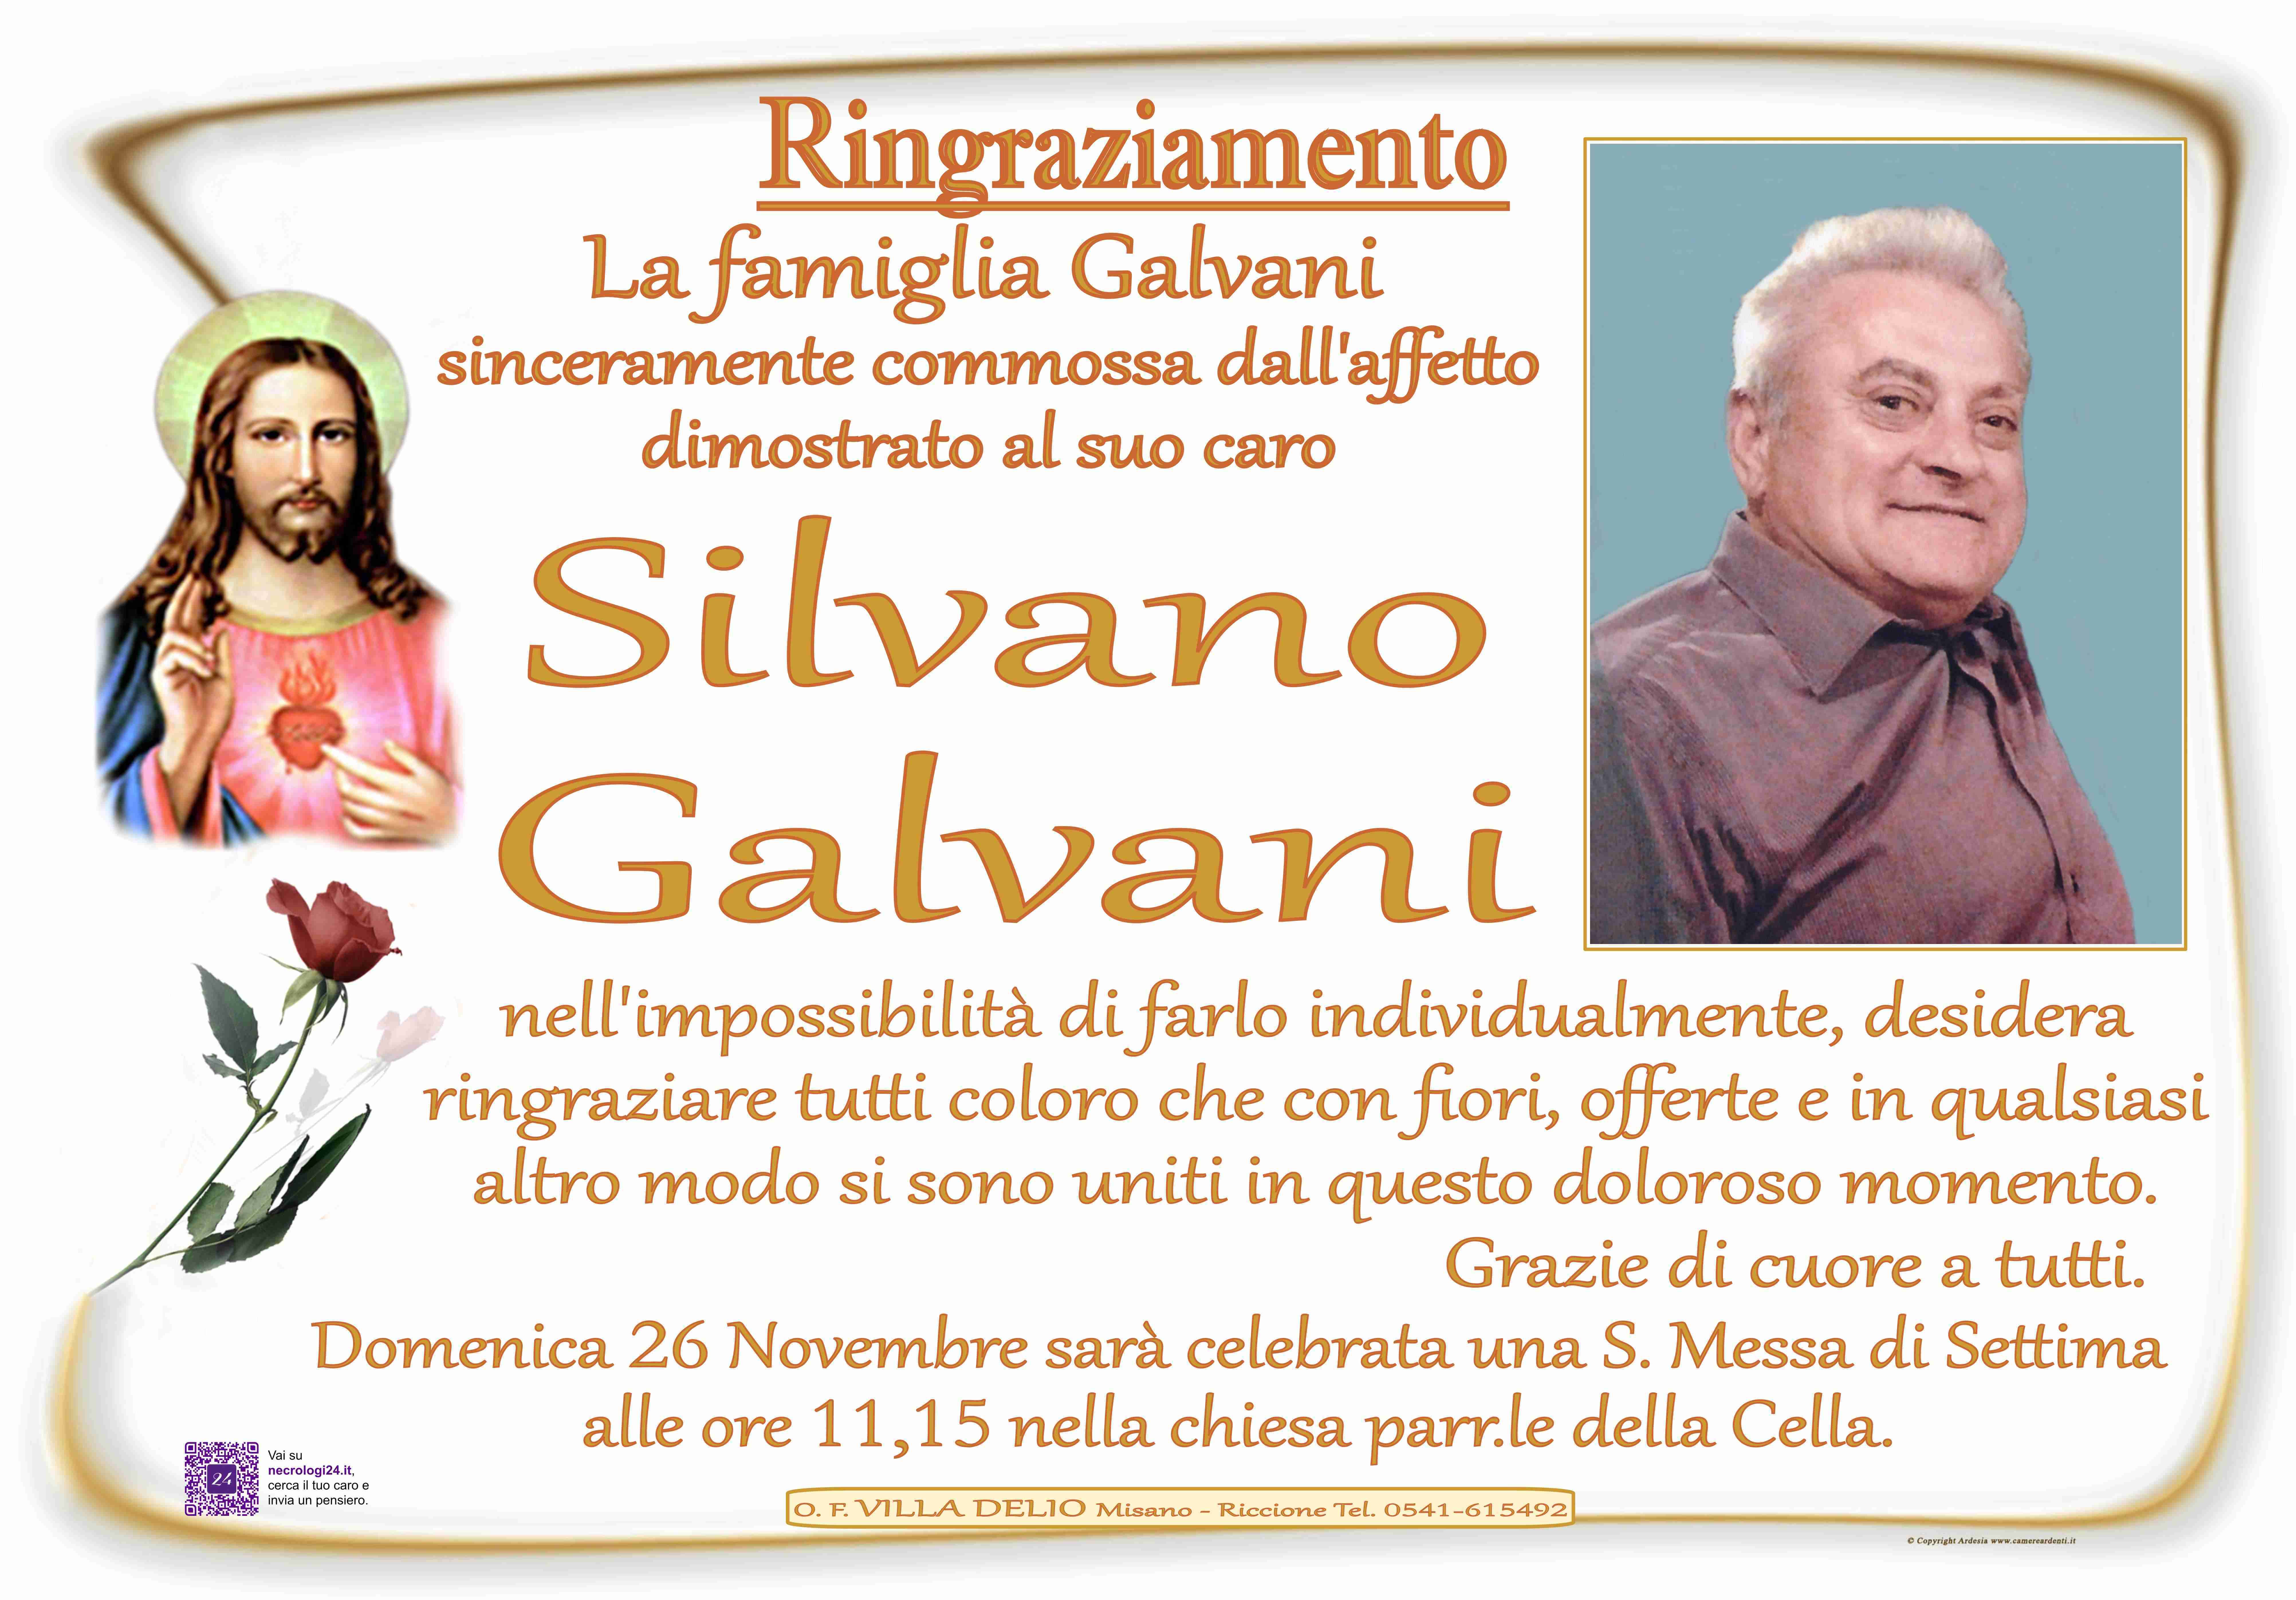 Silvano Galvani